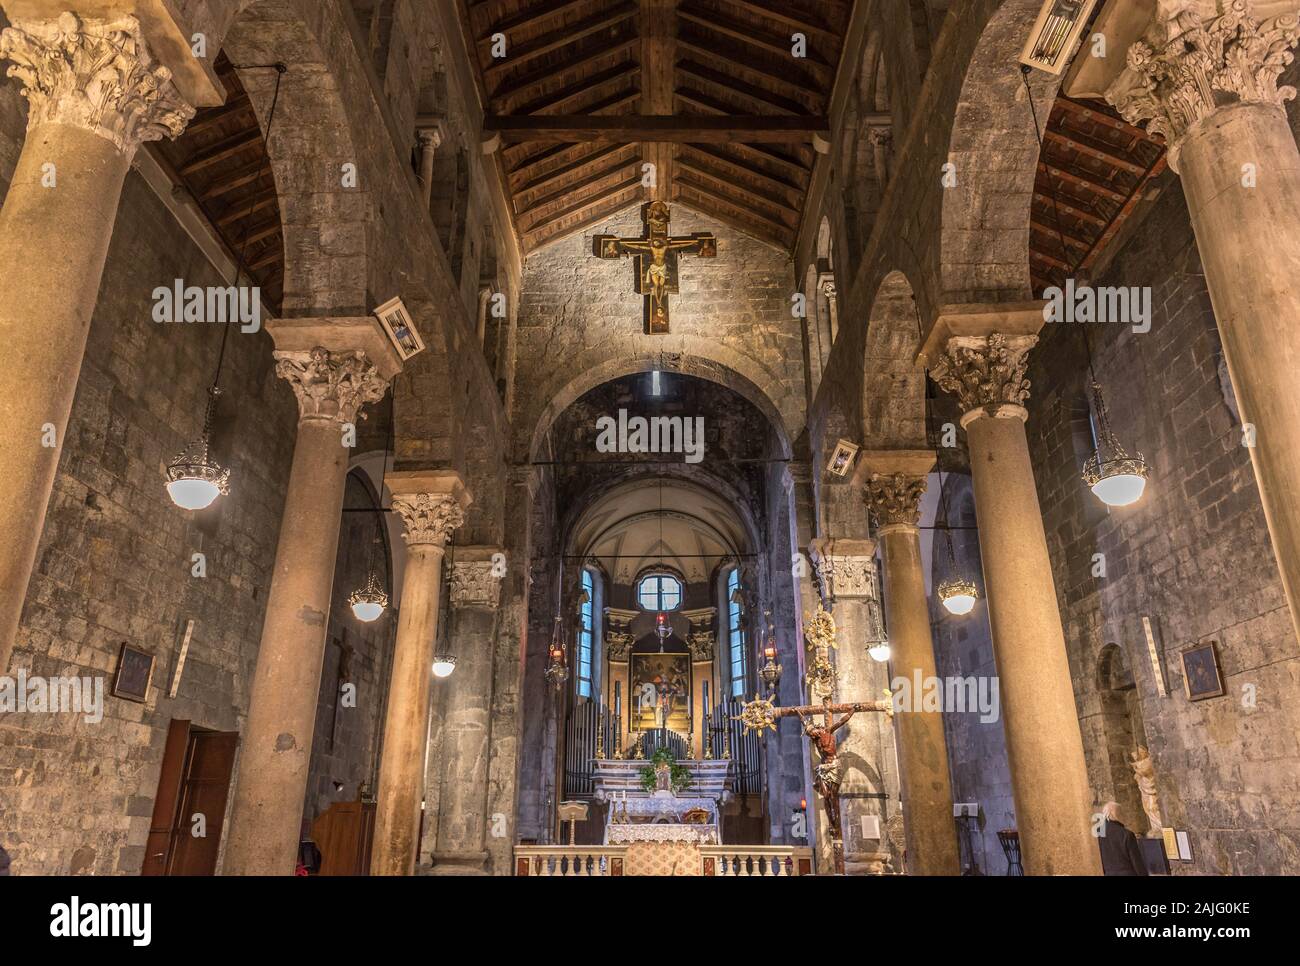 Genoa, Genova, Italy: Interior of romanesque church Chiesa di San Donato: stone walls, wooden roofing (trusses), wooden crucified Jesus (crucifix) Stock Photo